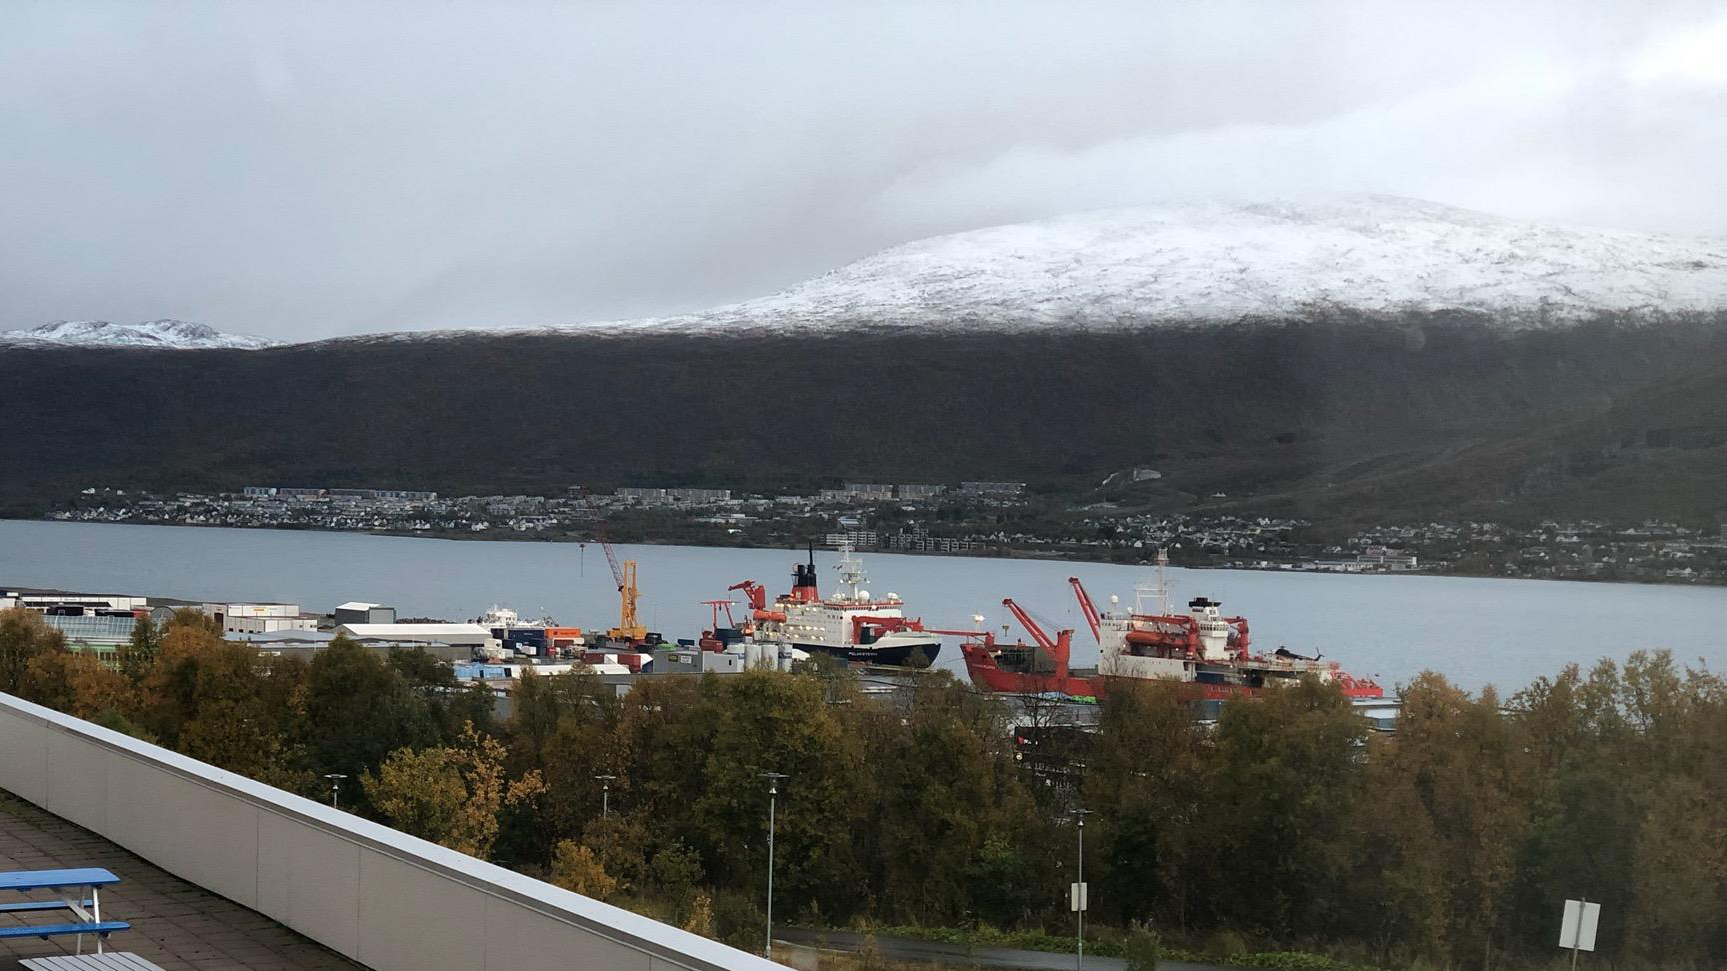 The R/V Polarstern sits in a Norwegian port.